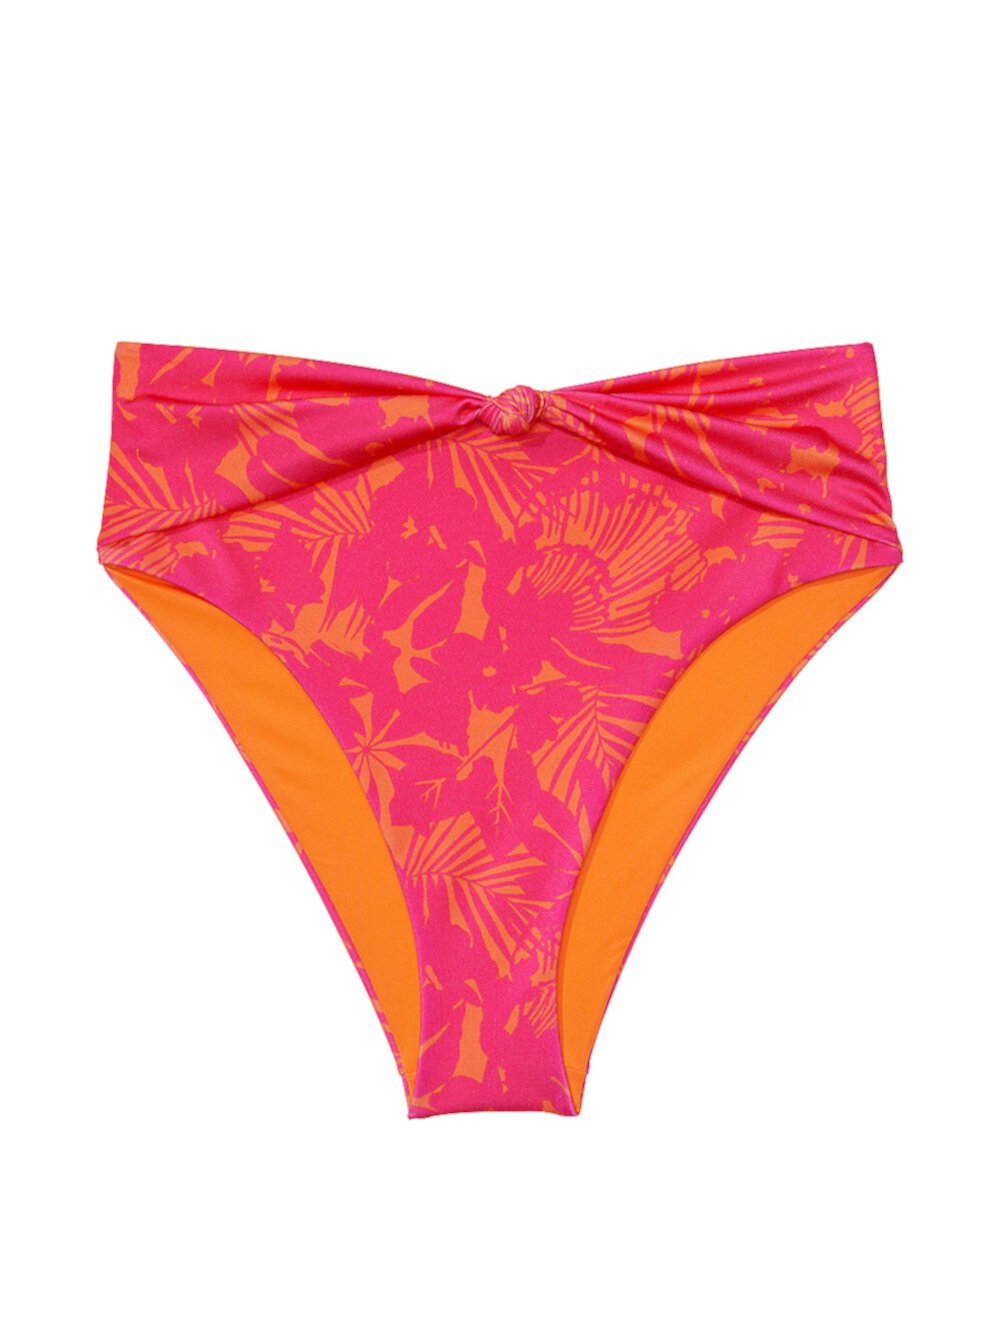 Knotted High-Waist Cheeky Bikini Bottom Victoria's Secret Swim